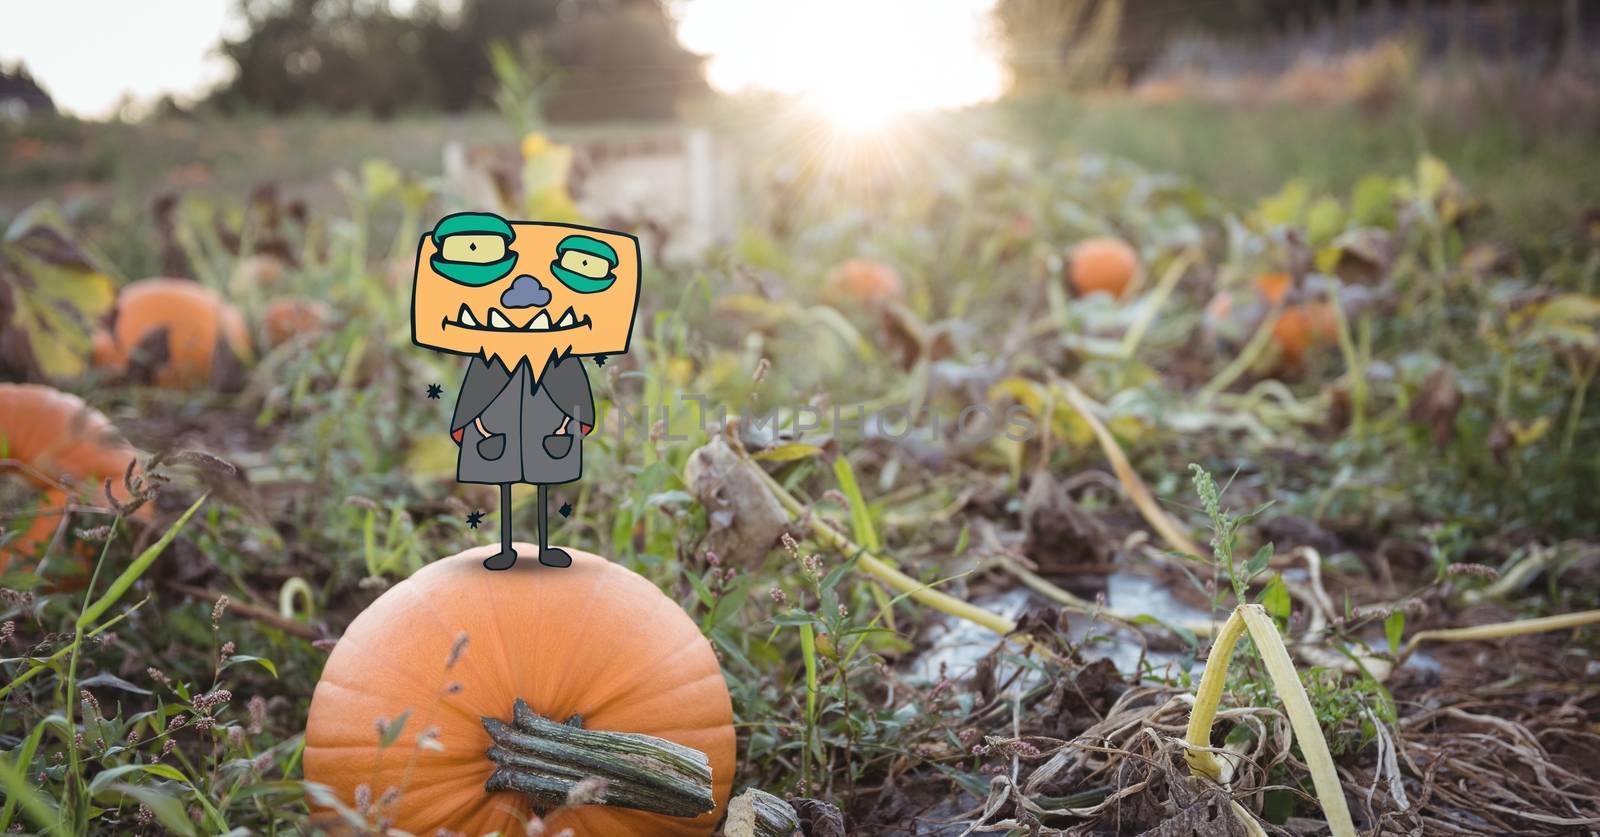 Digital composite of Monster cartoon standing on halloween pumpkin